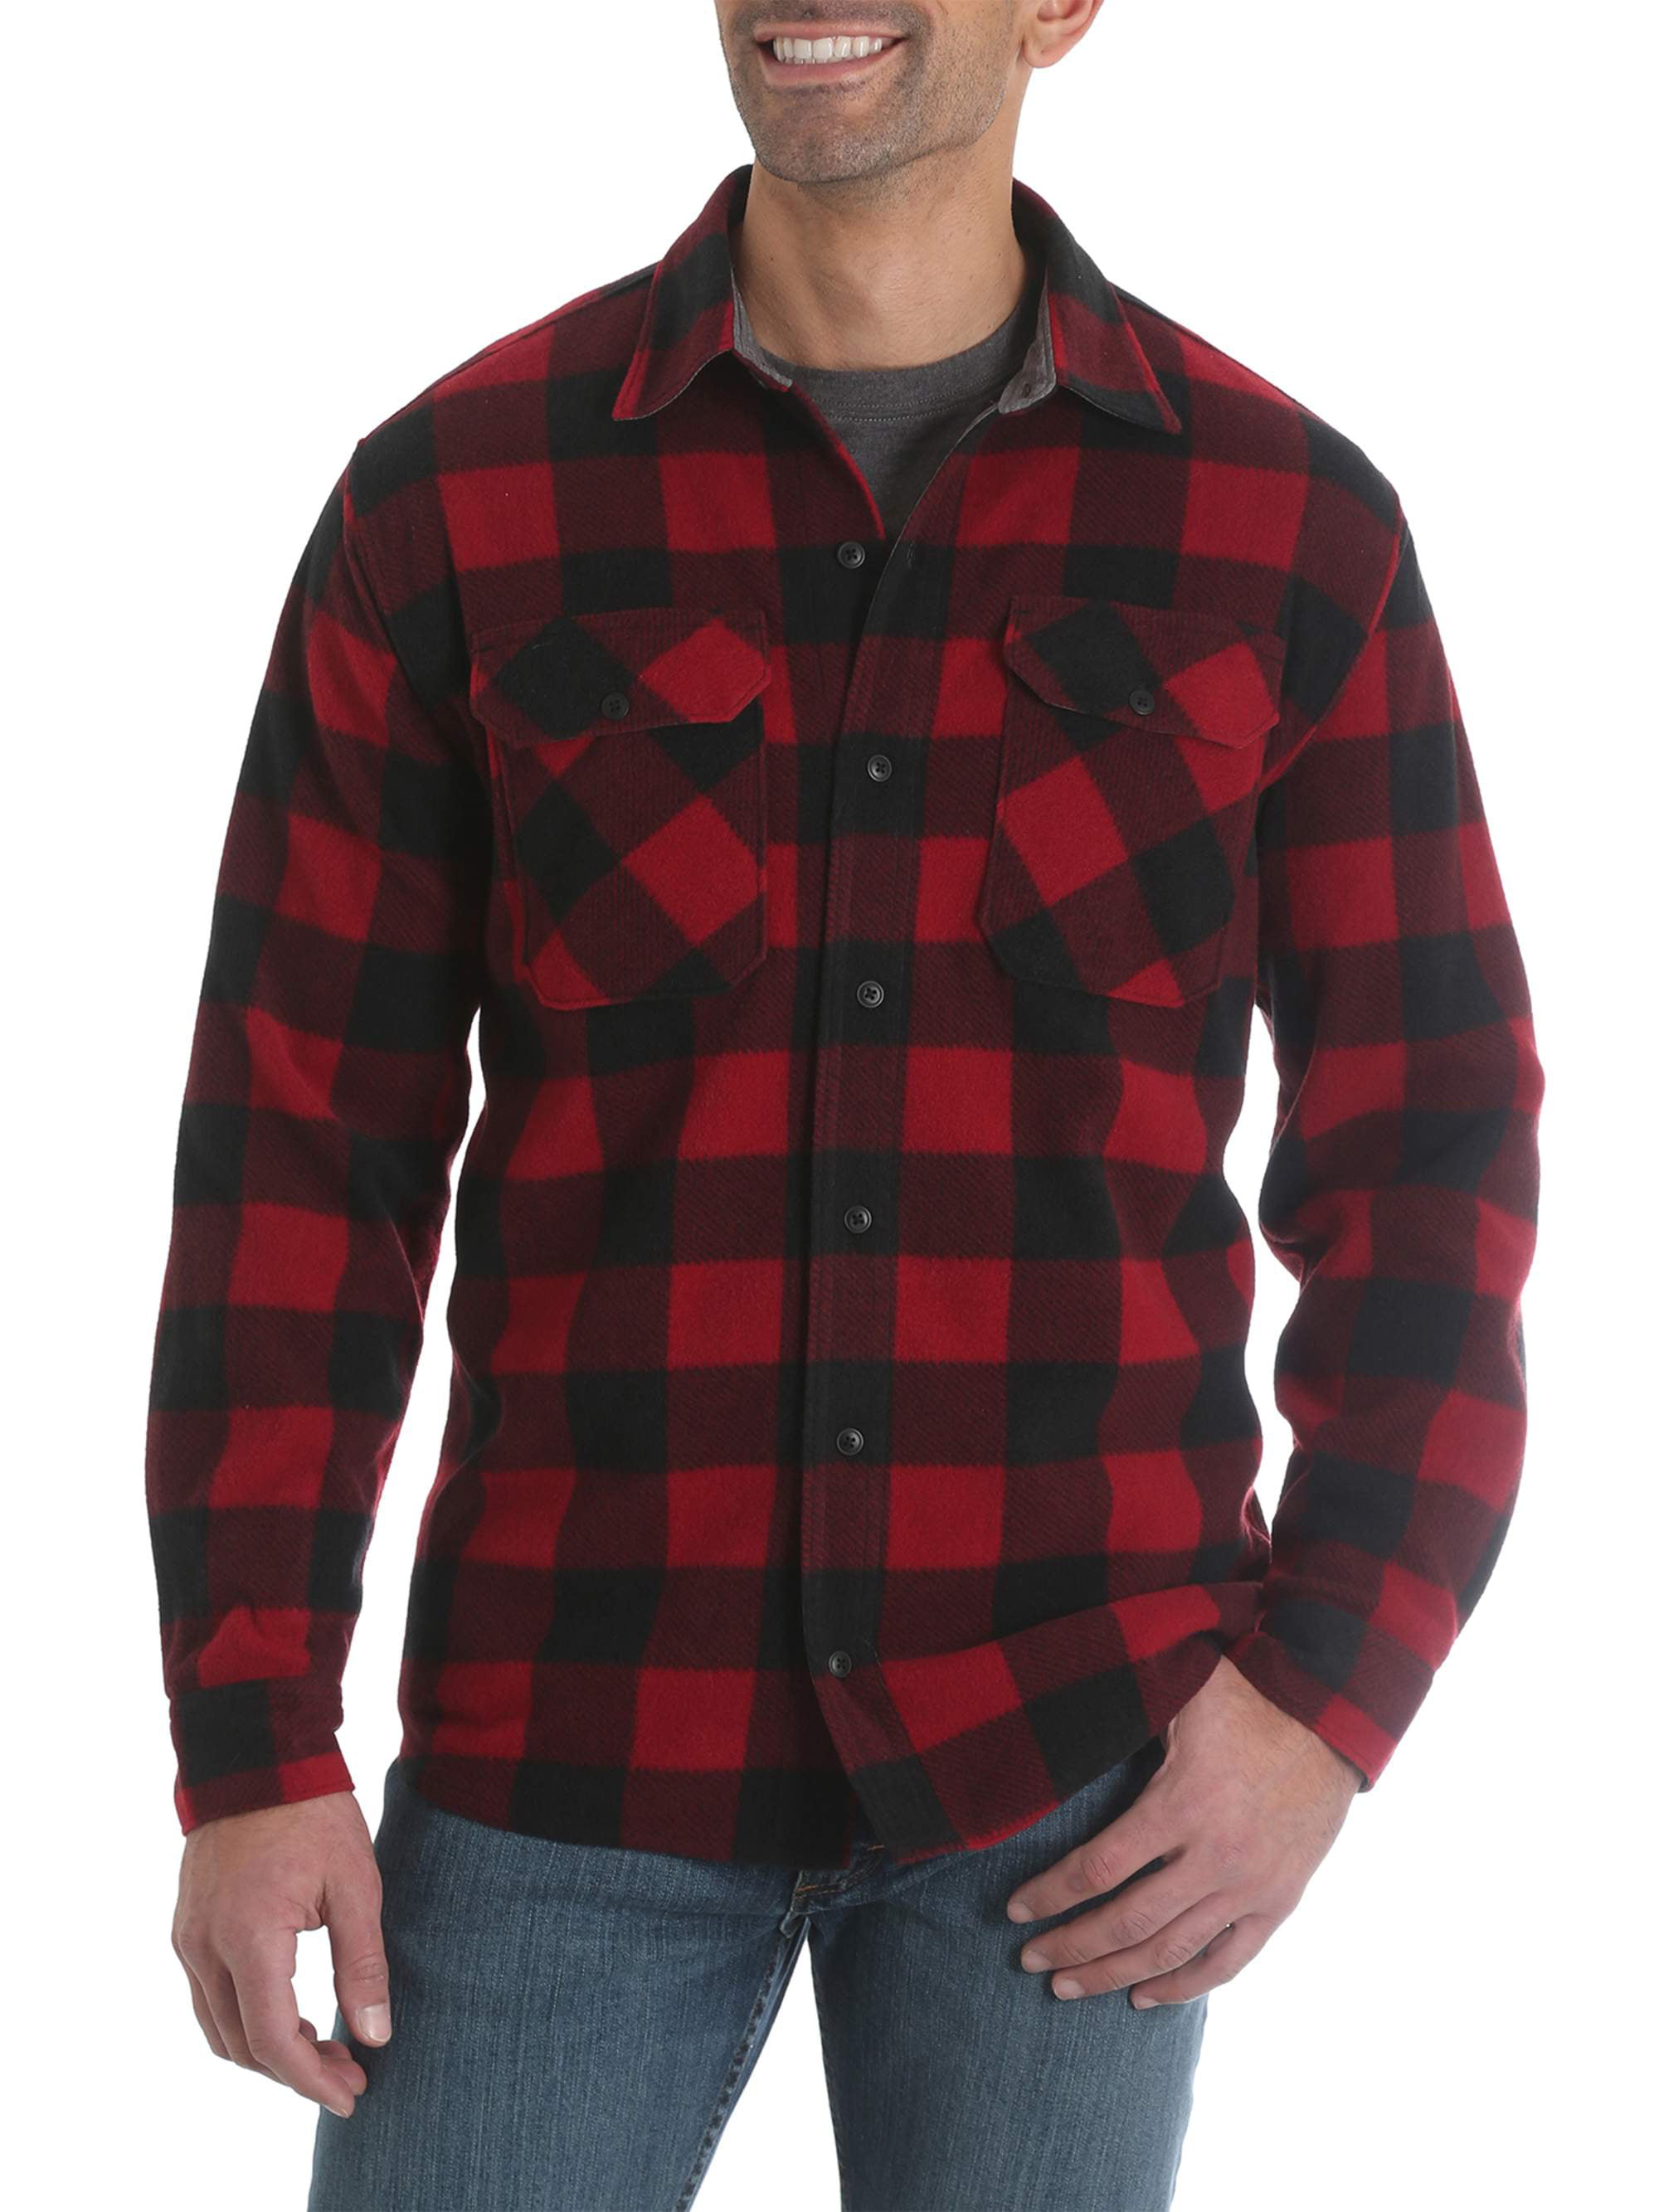 Wrangler Men's Long Sleeve Plaid Wicking Fleece Shirt - Walmart.com